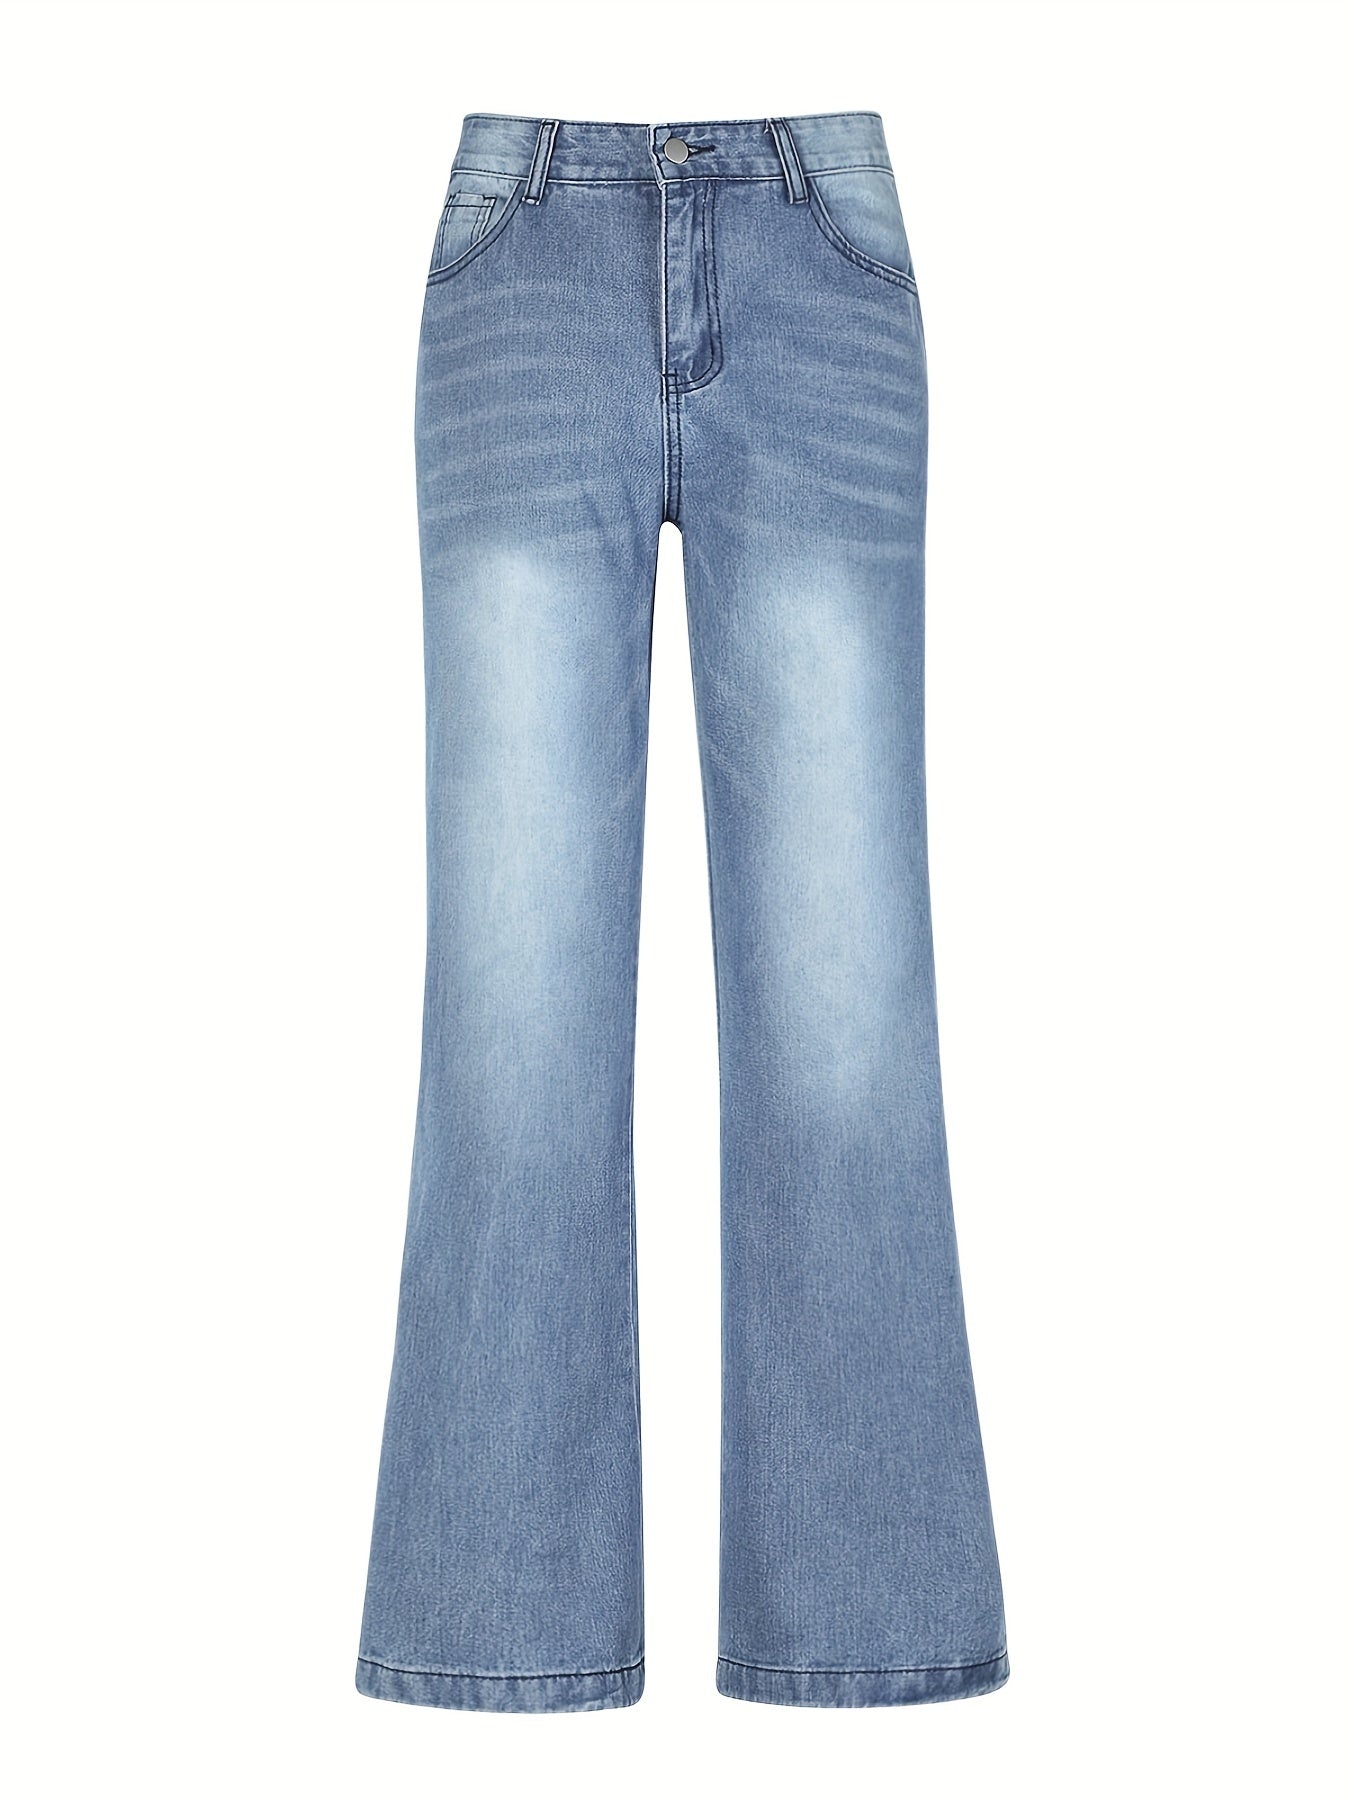 「lovevop」Blue High Waist Straight Jeans, Loose Fit Slash Pockets Baggy Denim Pants, Women's Denim Jeans & Clothing